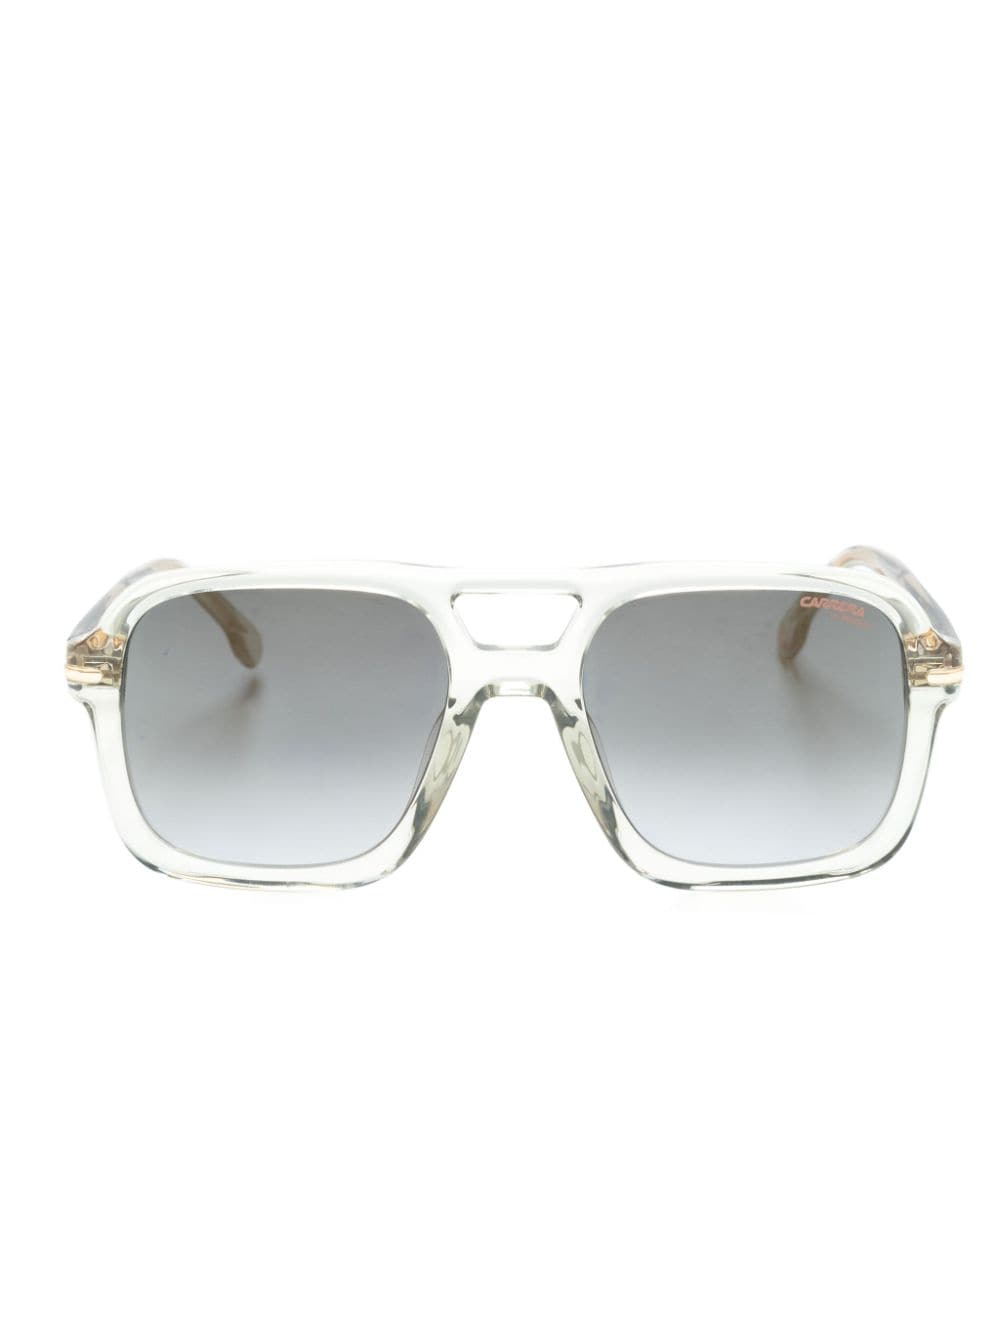 317/S navigator-frame sunglasses